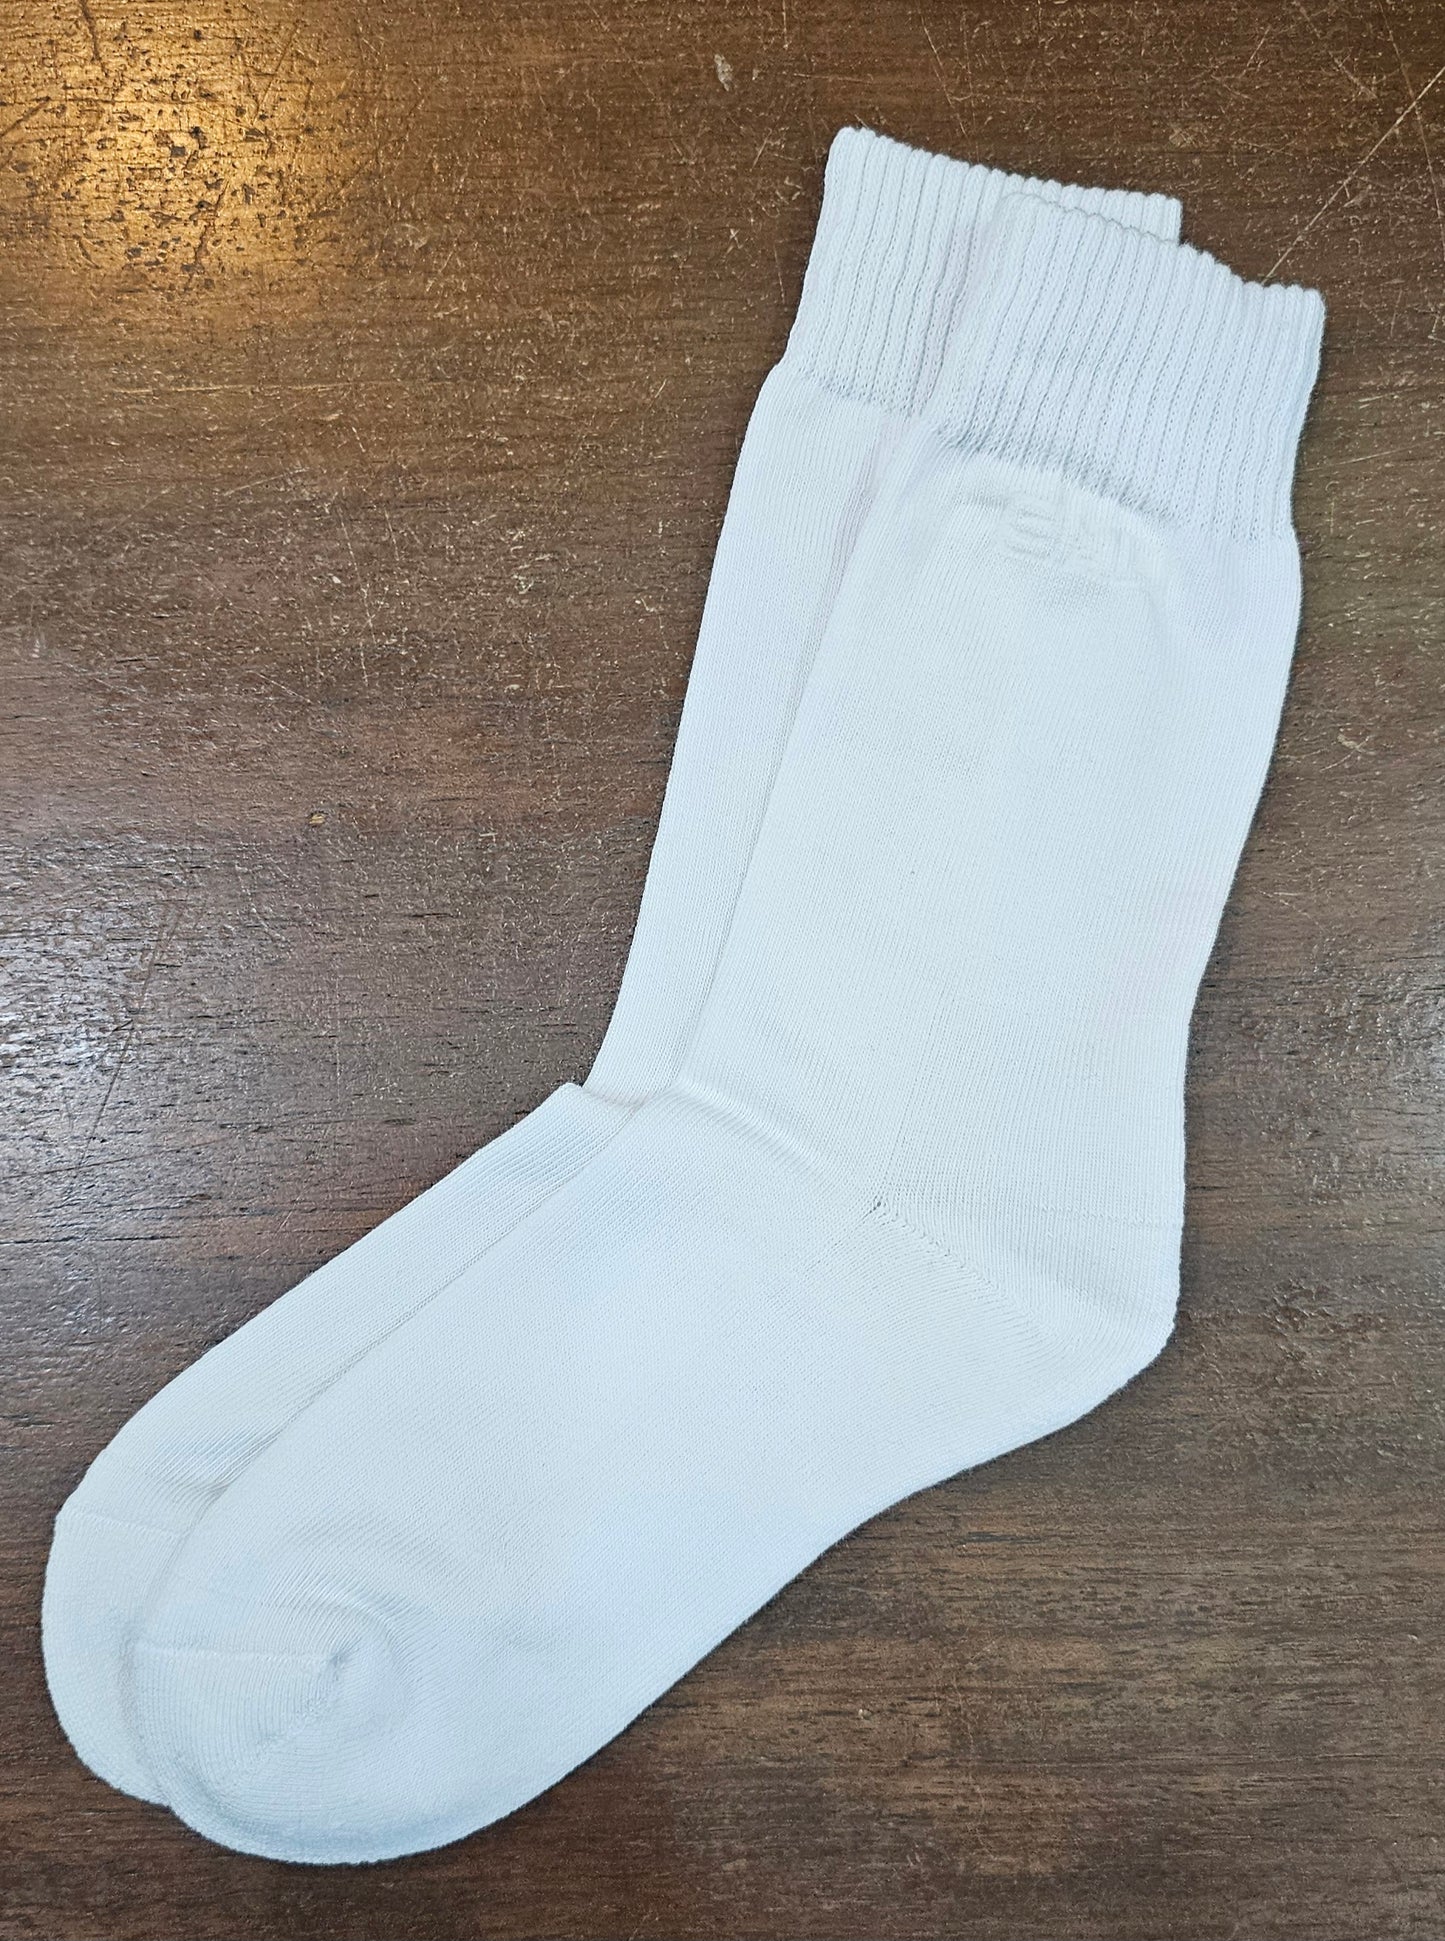 Thick Sole Socks (Stokin tawaf tapak tebal)